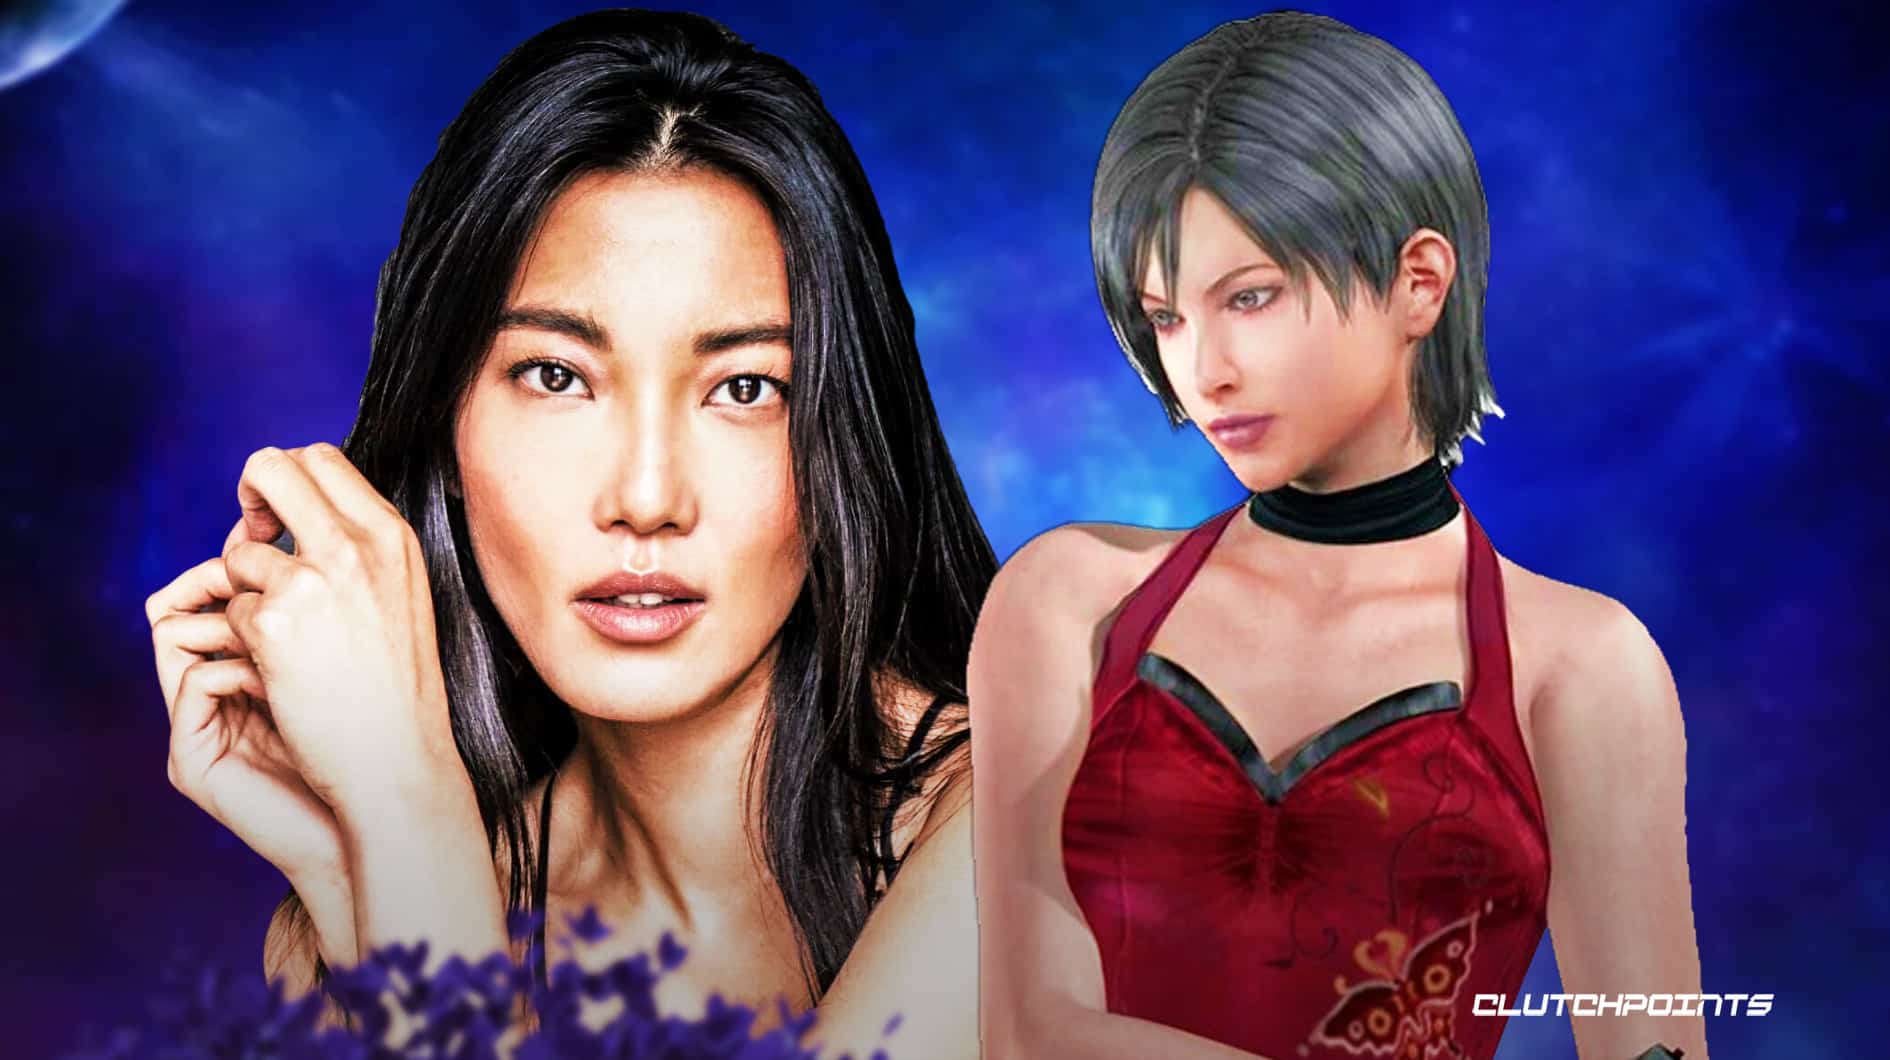 Resident Evil 4 Deluxe Edition Skins Fully Revealed, Including Emo Ashley